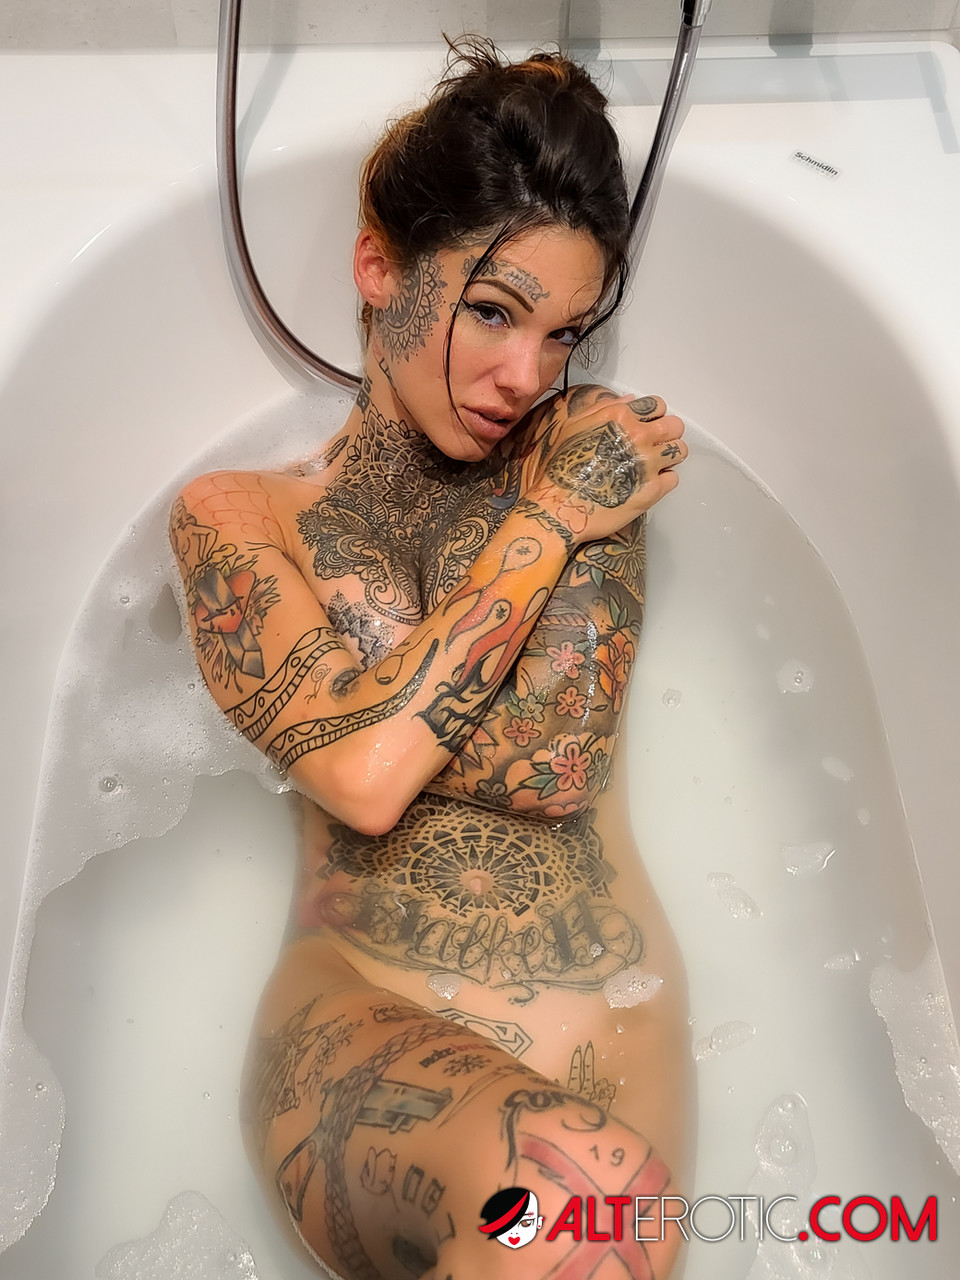 Tattooed girl Lucy Zzz takes a bath after POV sex in a bathtub photo porno #422562628 | Alt Erotic Pics, Lucy Zzz, Tattoo, porno mobile